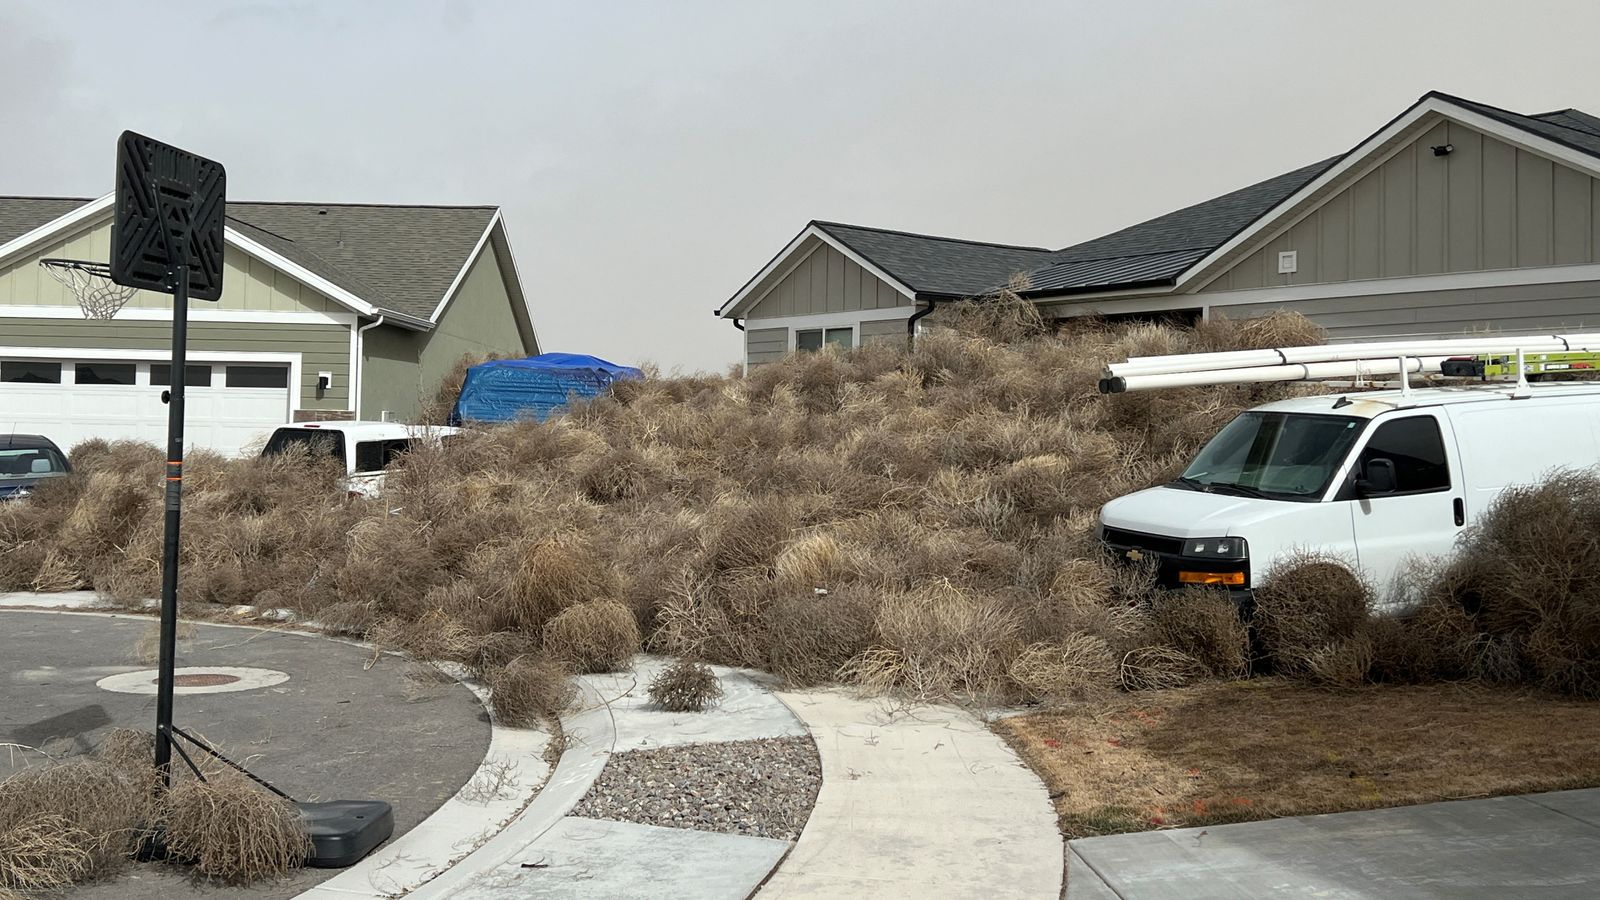 tumbleweed invades streets in utah and nevada